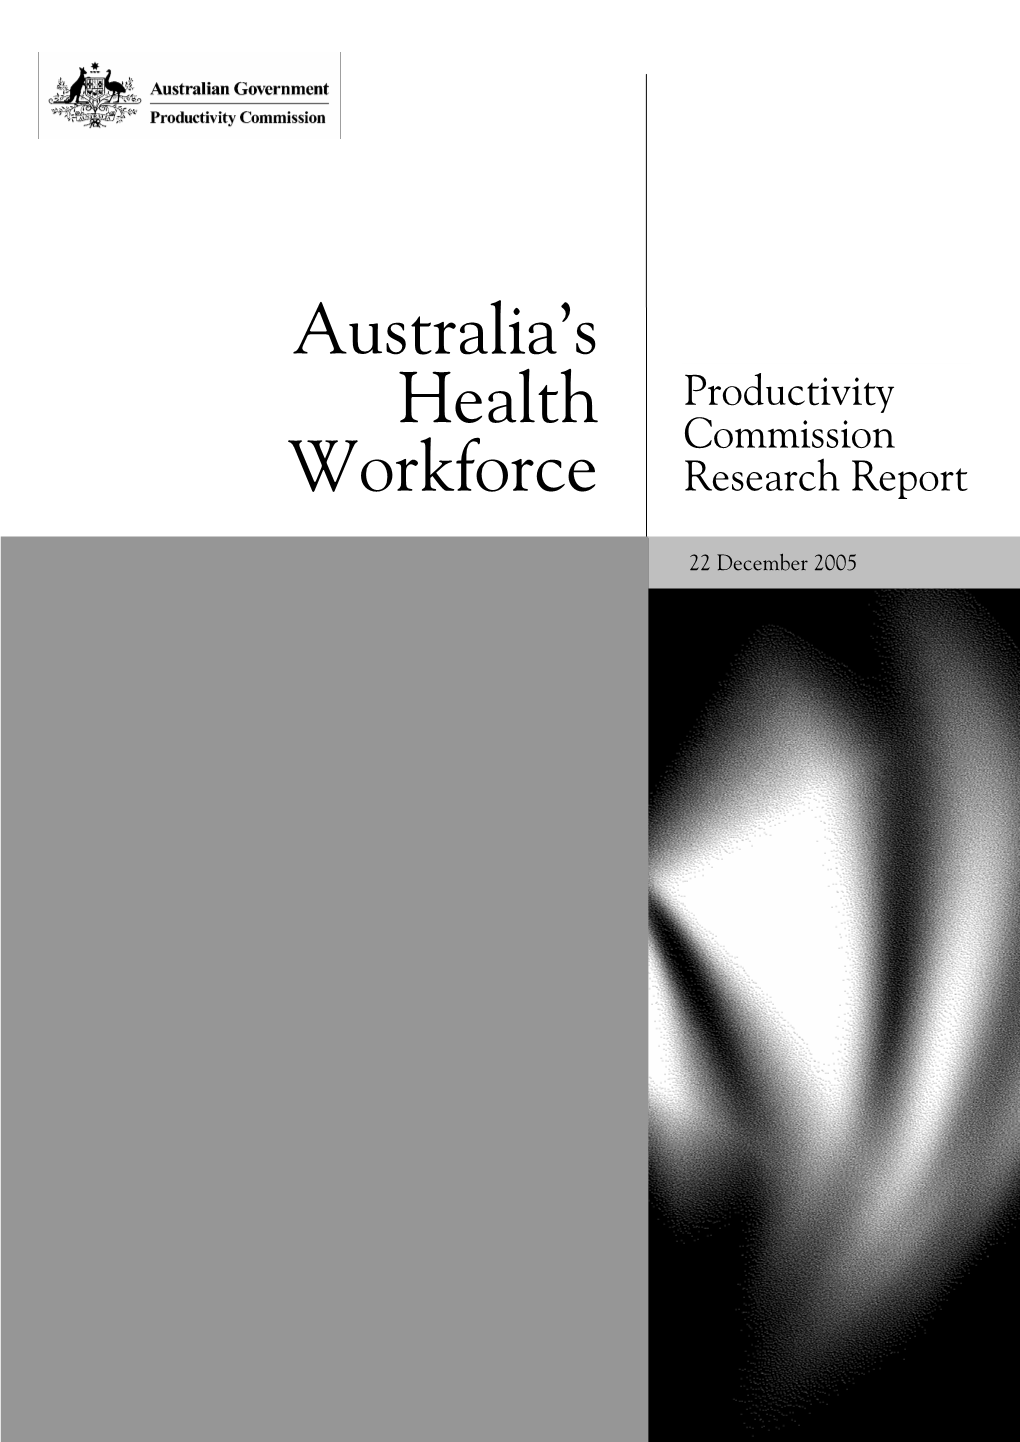 Australia's Health Workforce